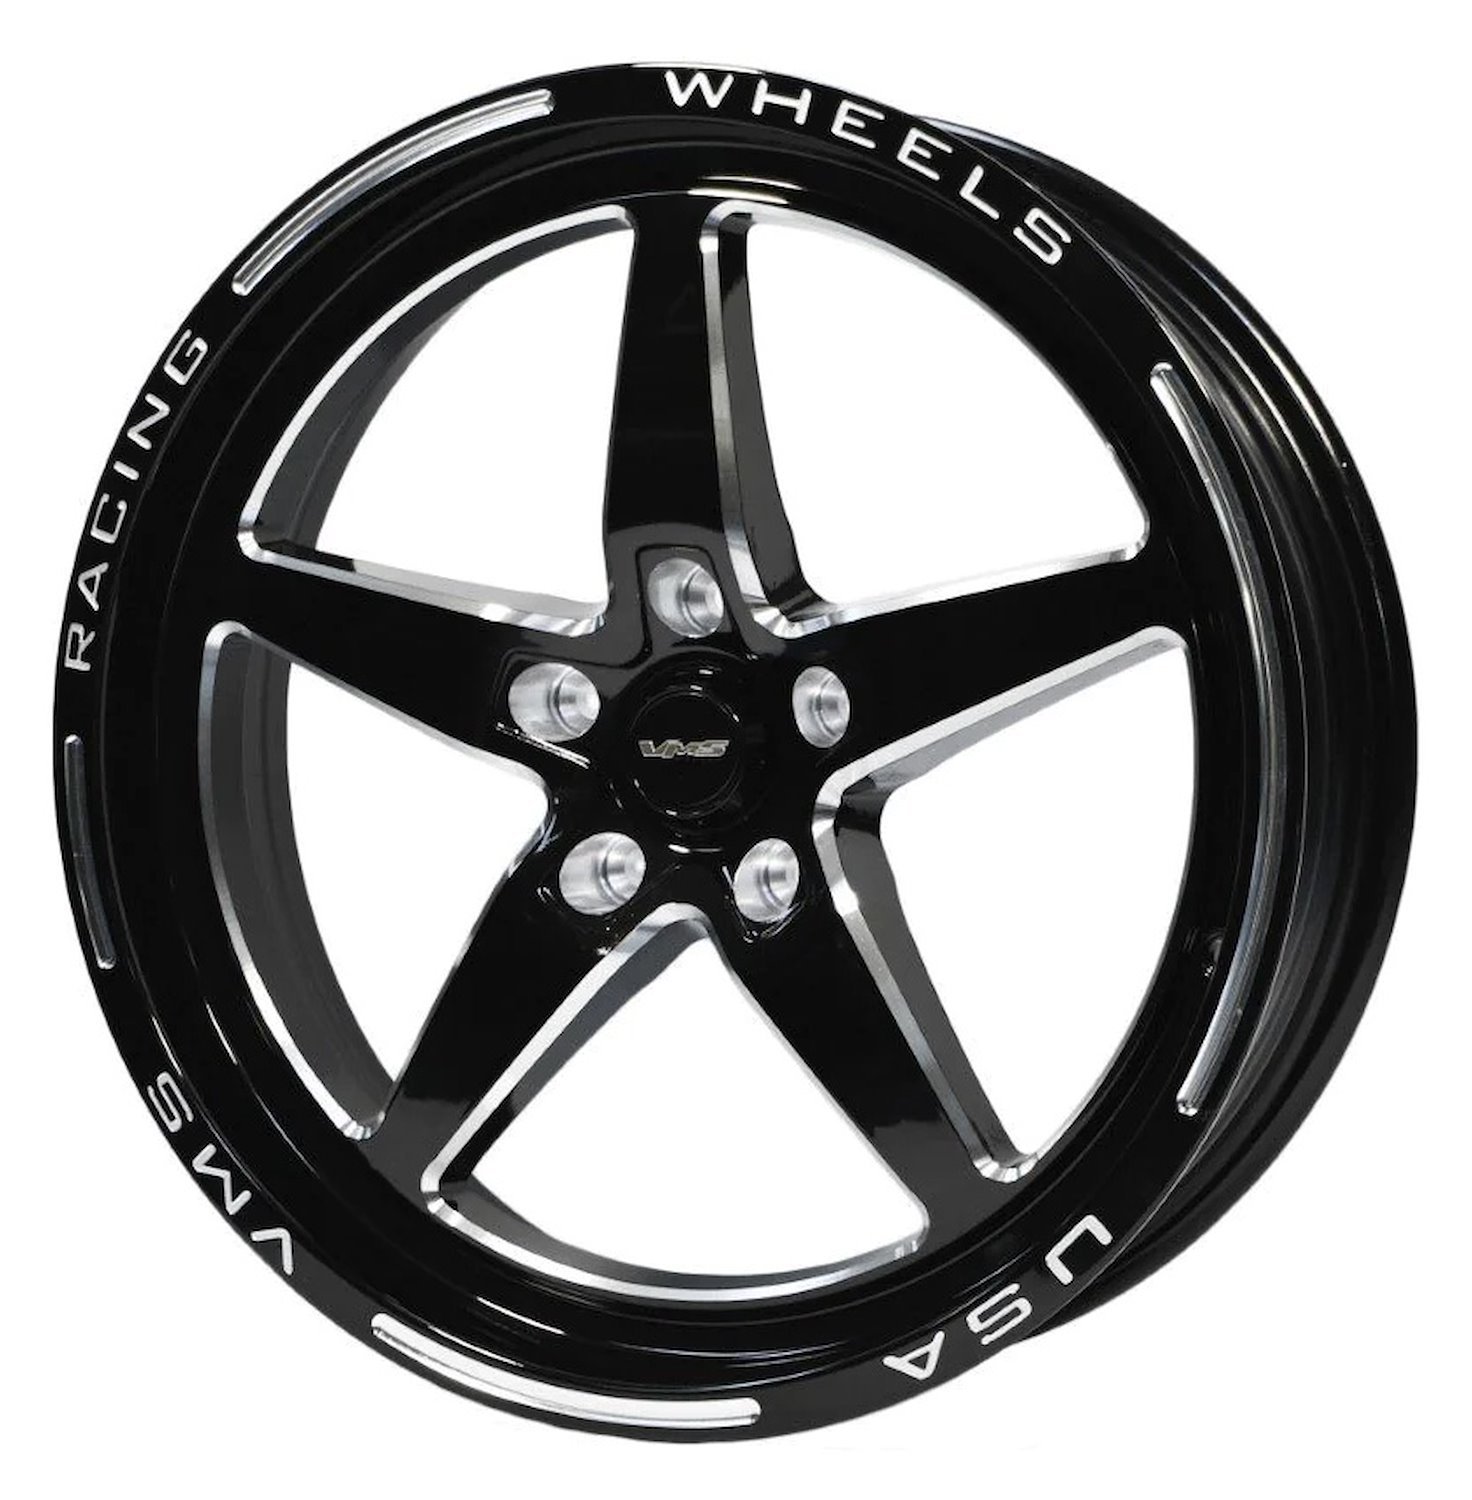 VWST025 V-Star Wheel, Size: 17" x 4.5", Bolt Pattern: 5 x 4 3/4" (120.65 mm) [Finish: Gloss Black Milled]